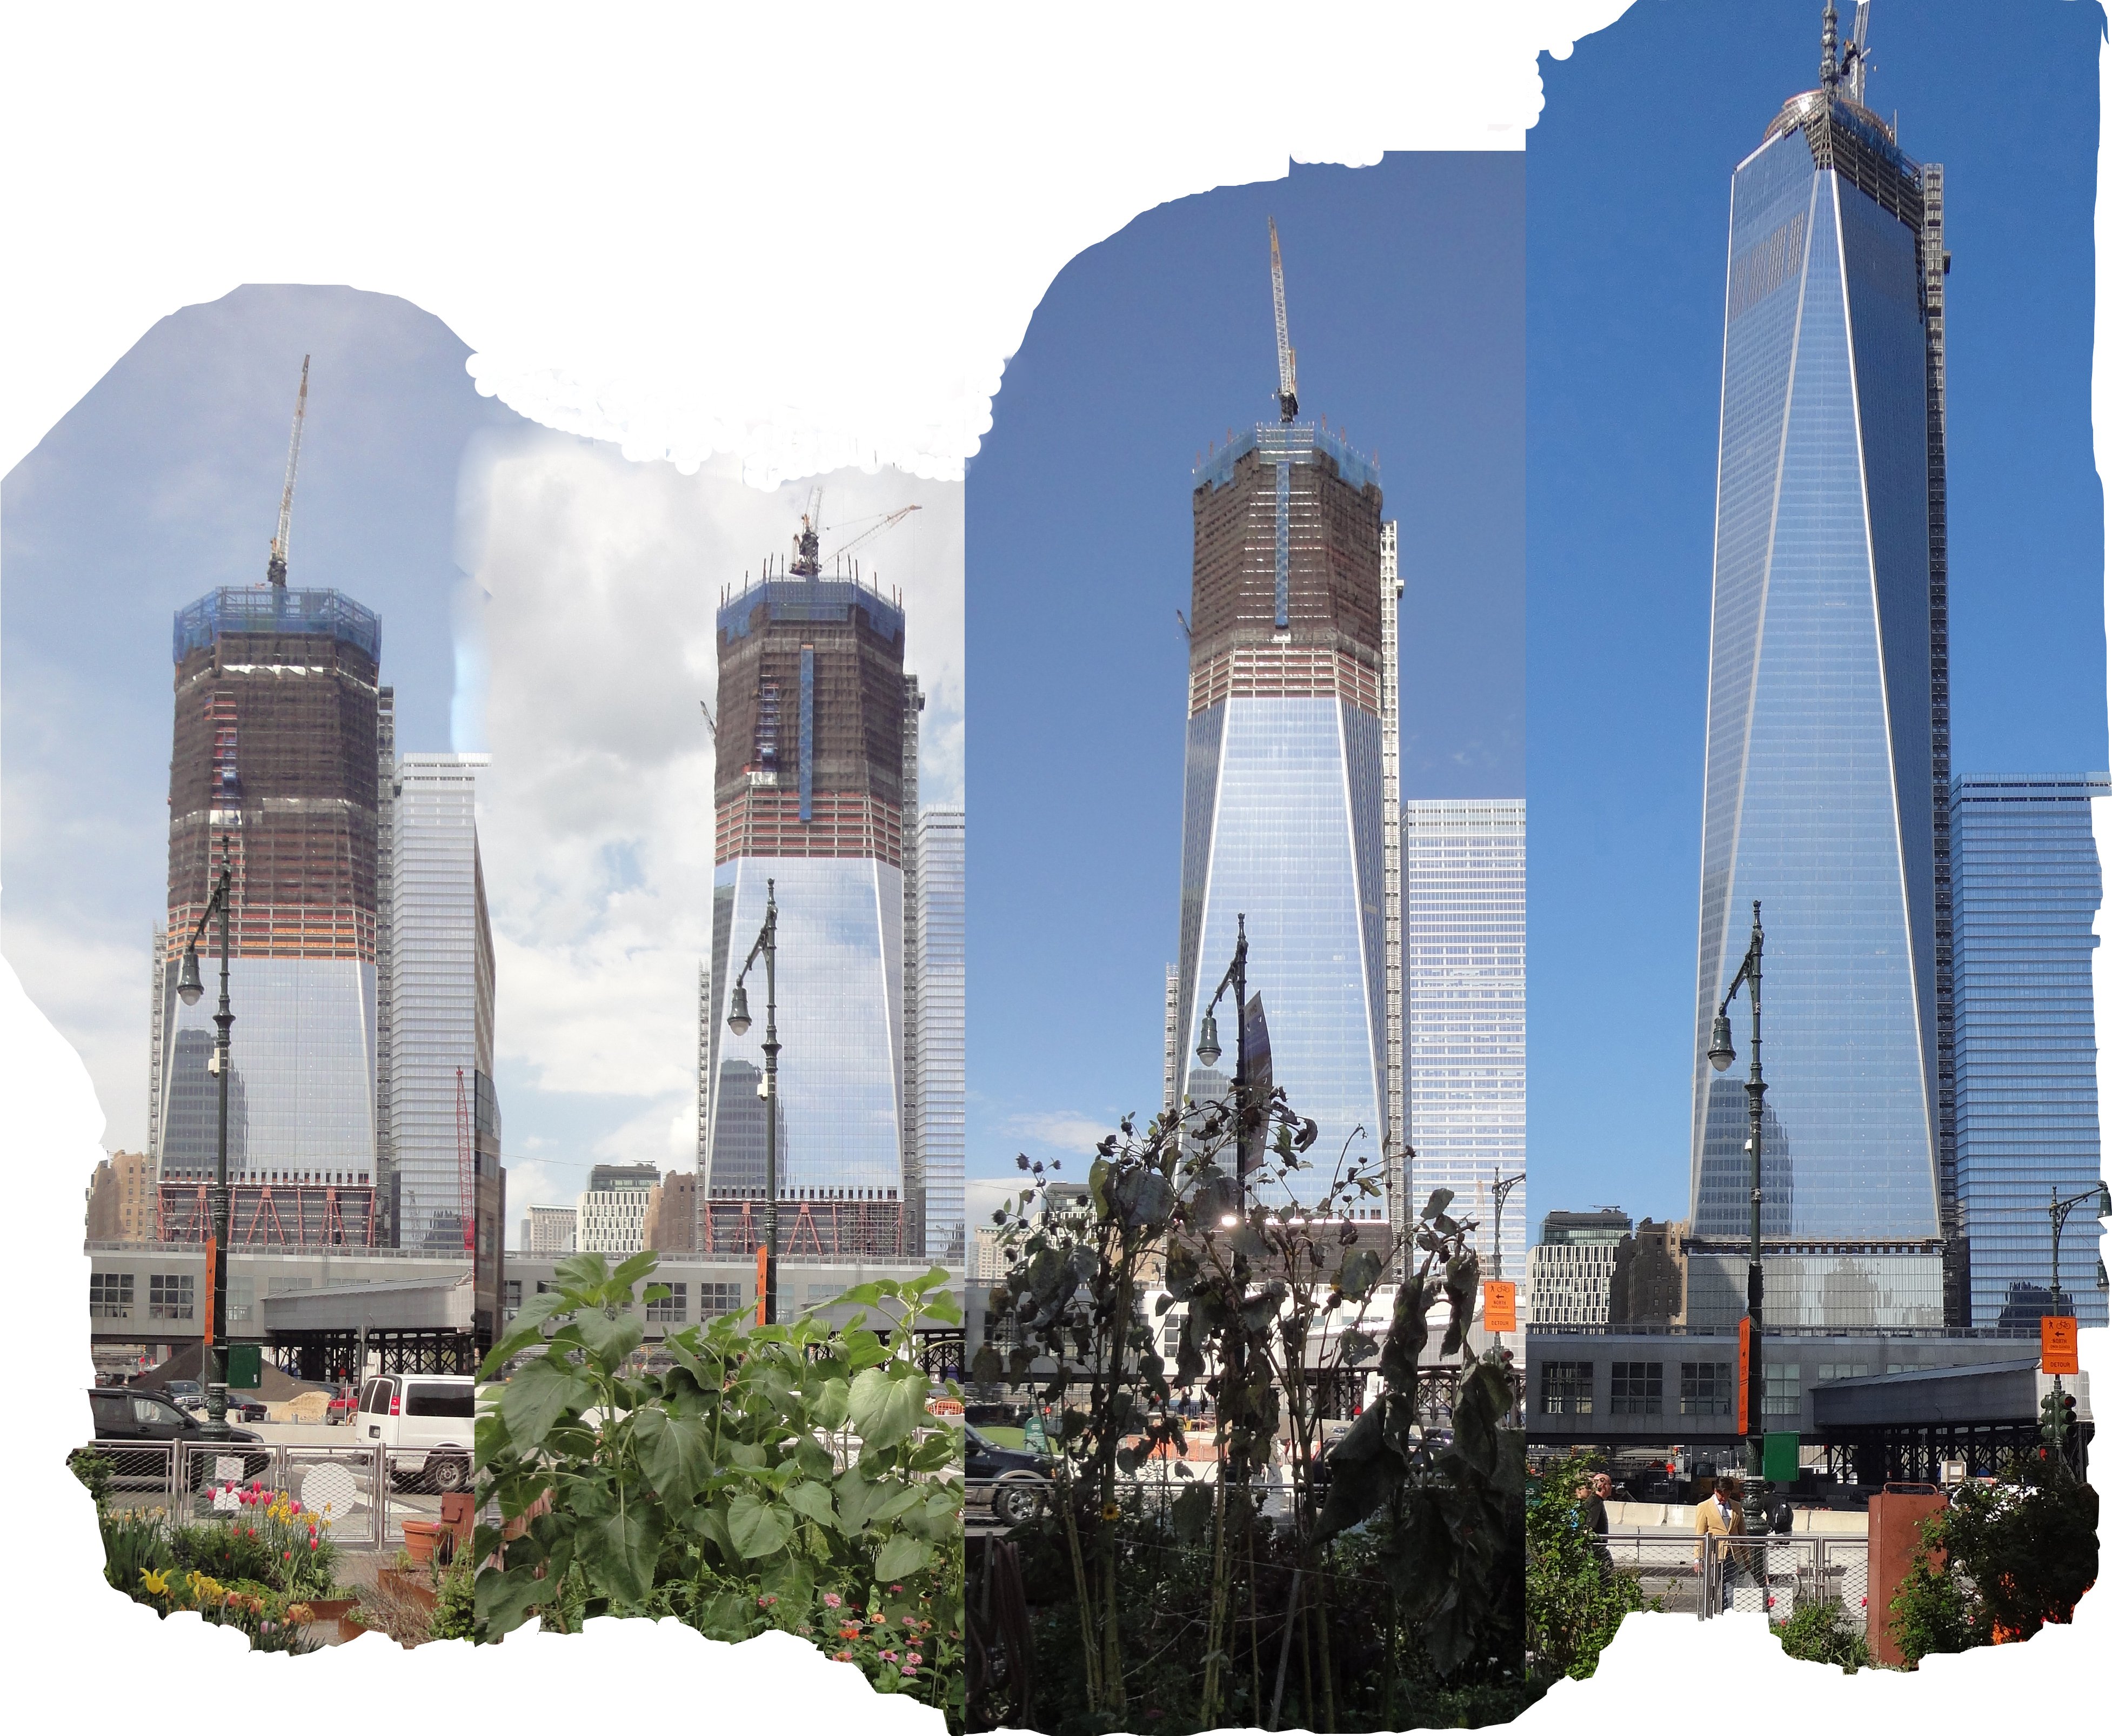 https://wallup.net/wp-content/uploads/2019/09/419992-wtc-world-trade-center-skyscraper-city-cities-building-new-york-1.jpg